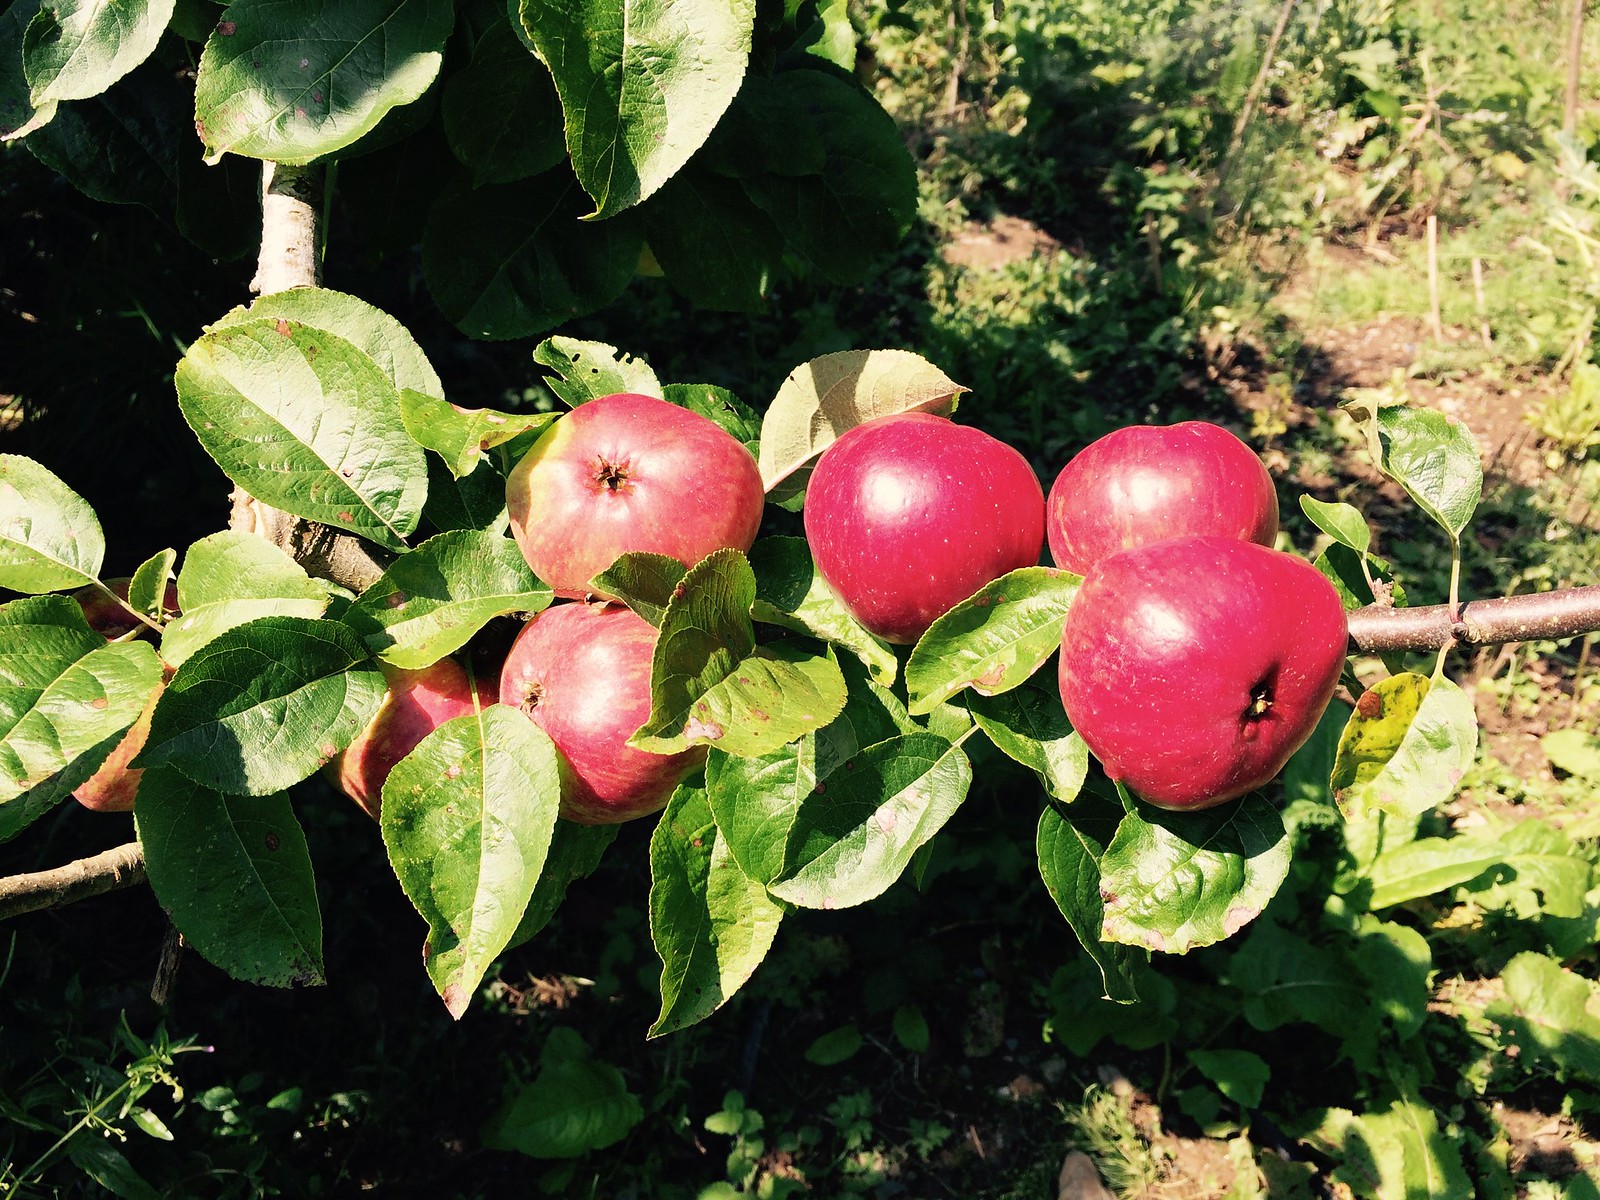 Harvesting the apples